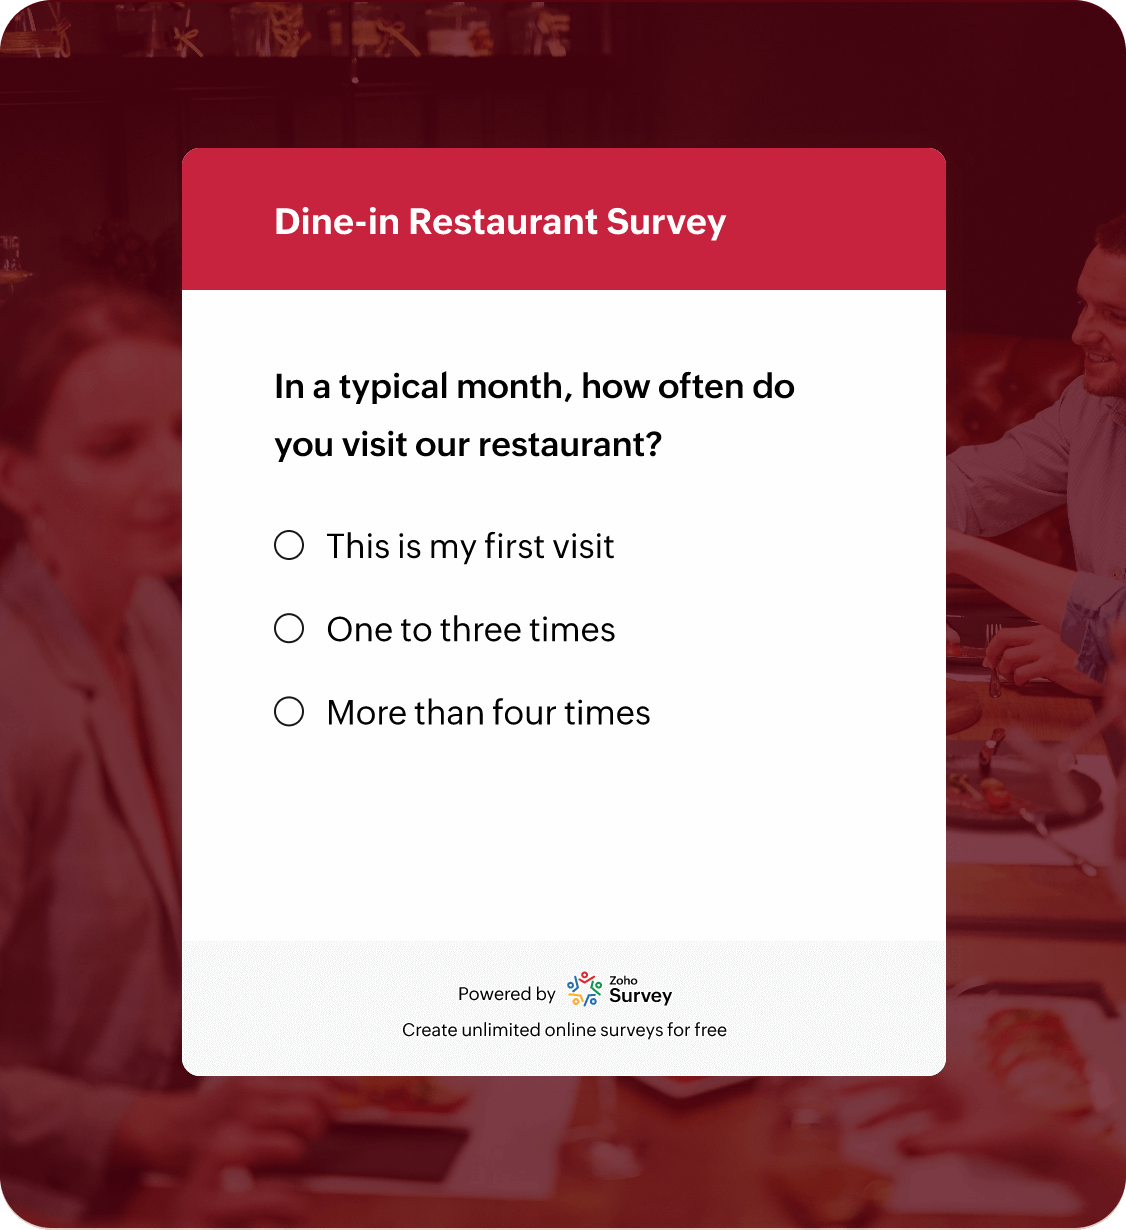 Dine-in restaurant survey questionnaire template